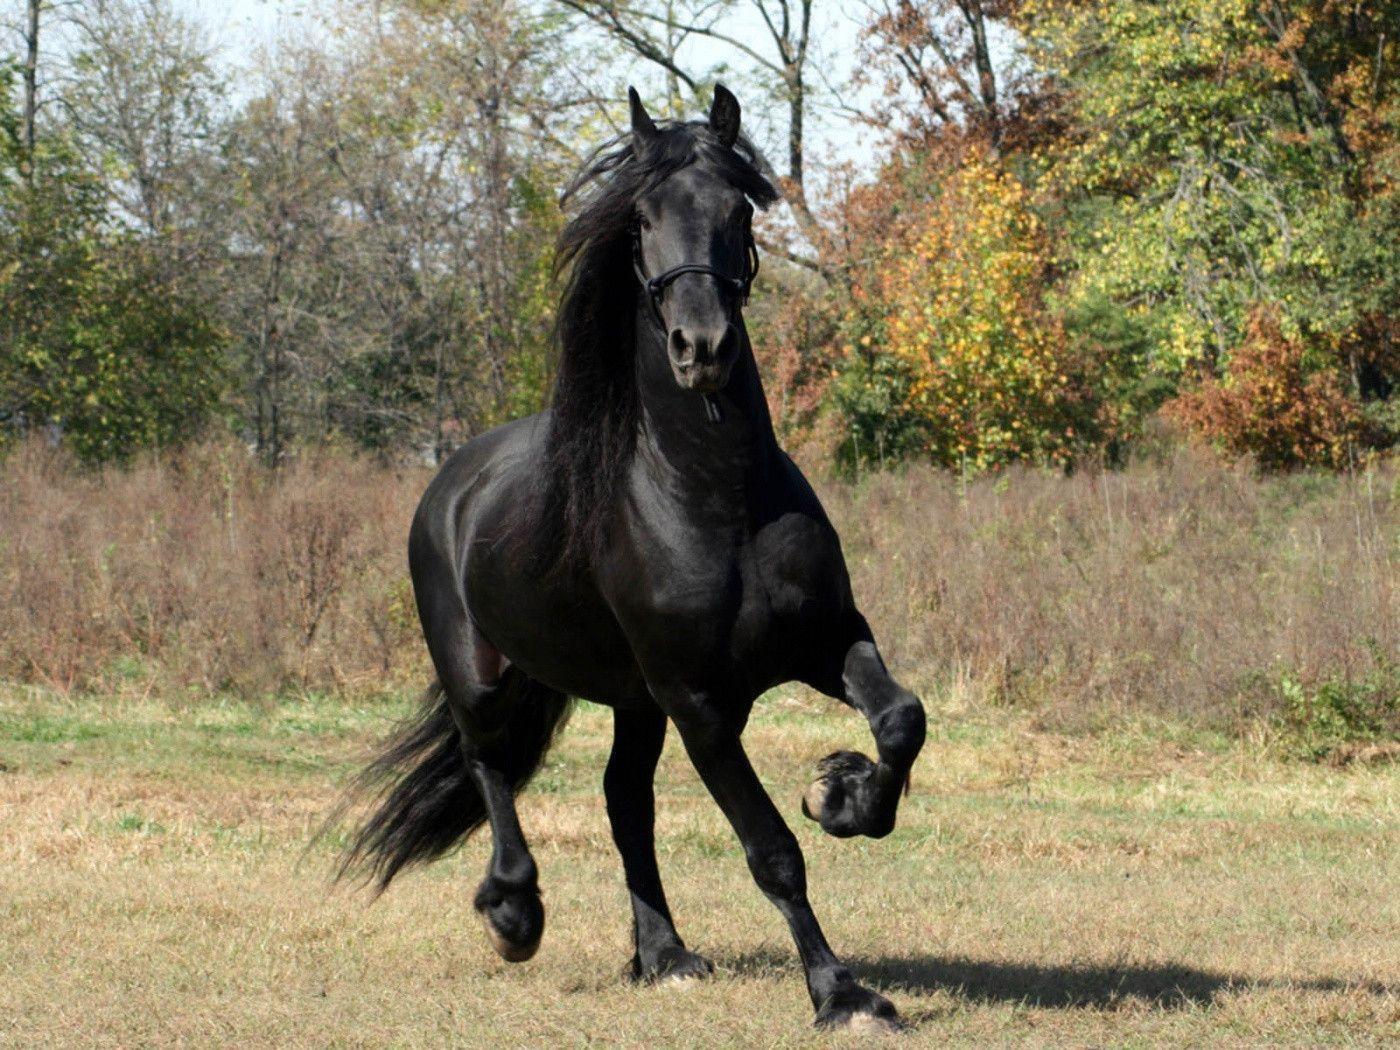 running black horse hd wallpaper download